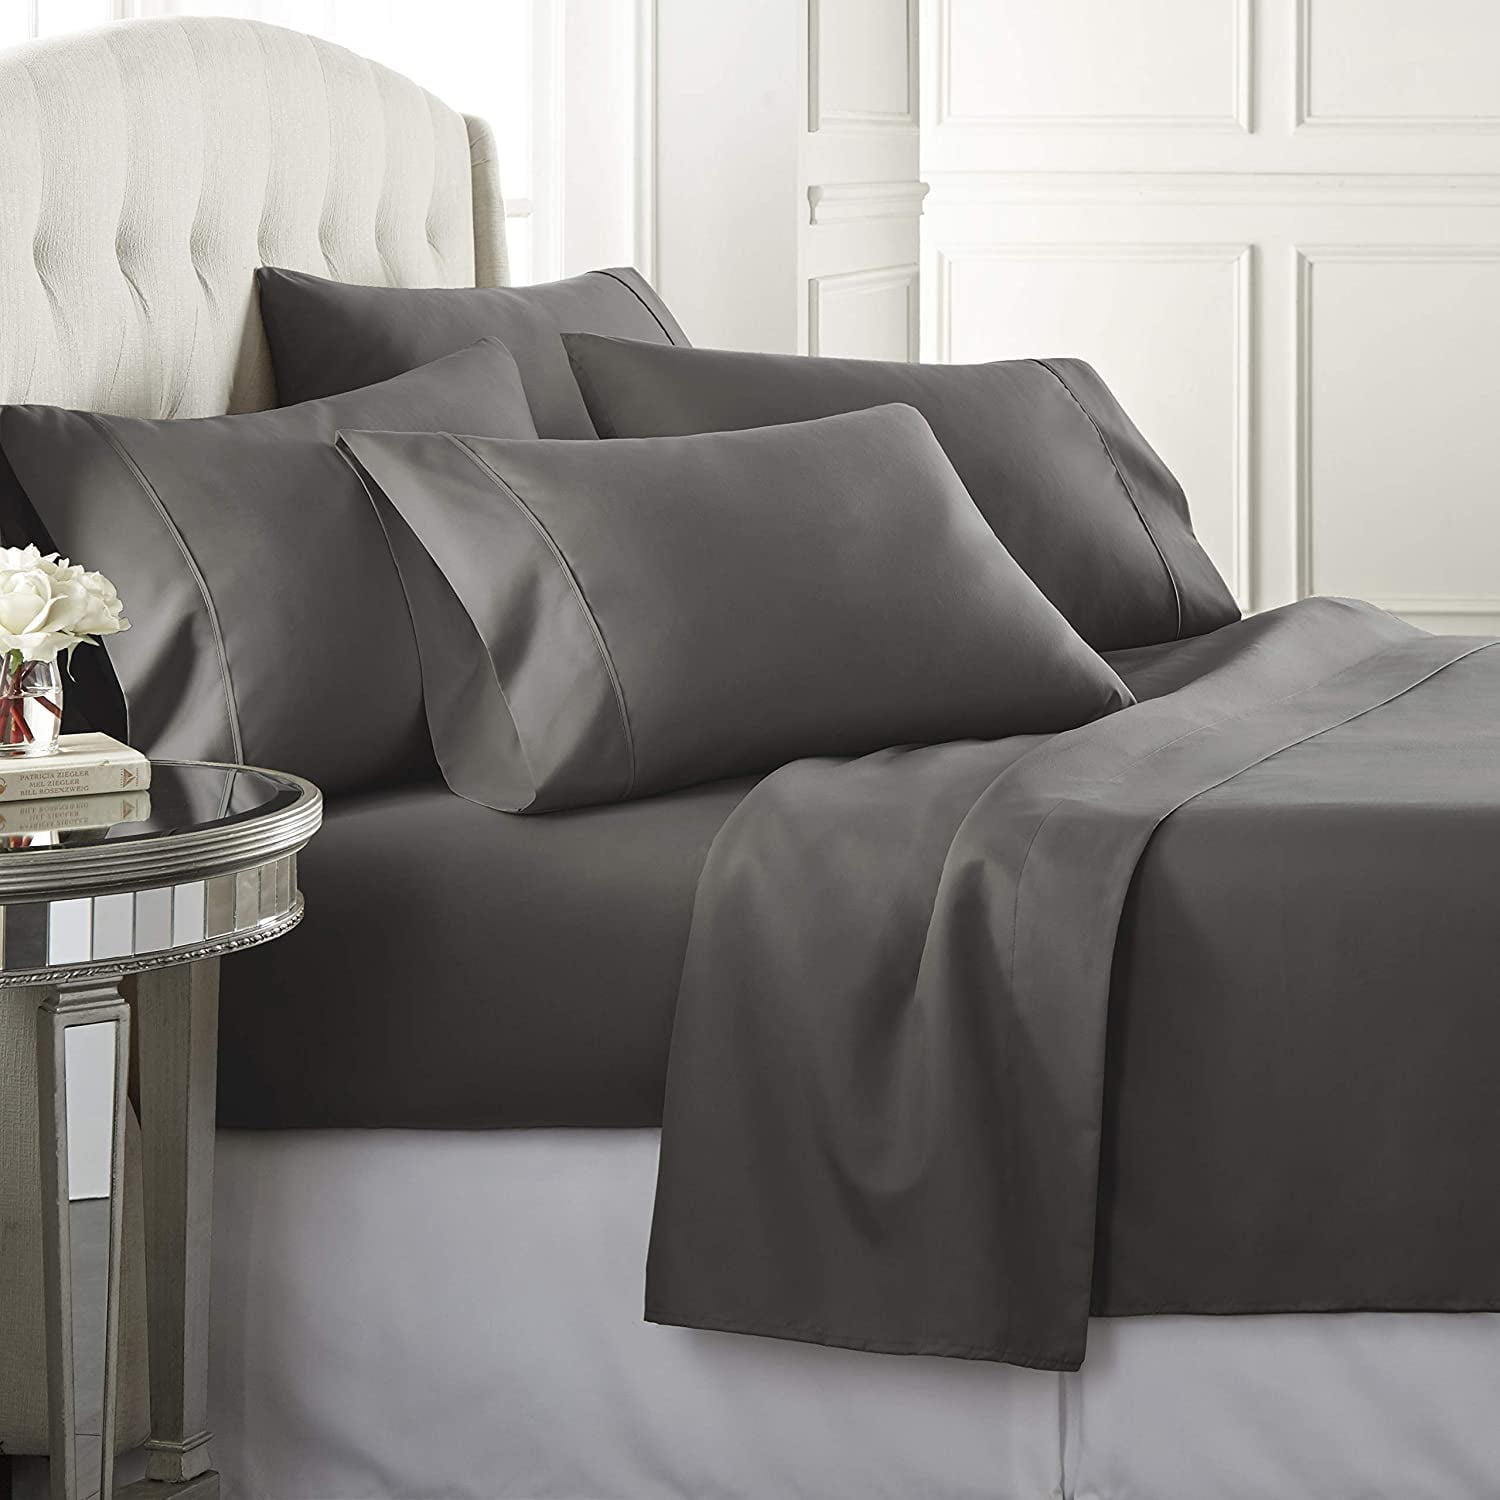 6 Piece Premium Bed Sheets Set Queen 1800 Series Hotel Luxury Soft Bedding Set 